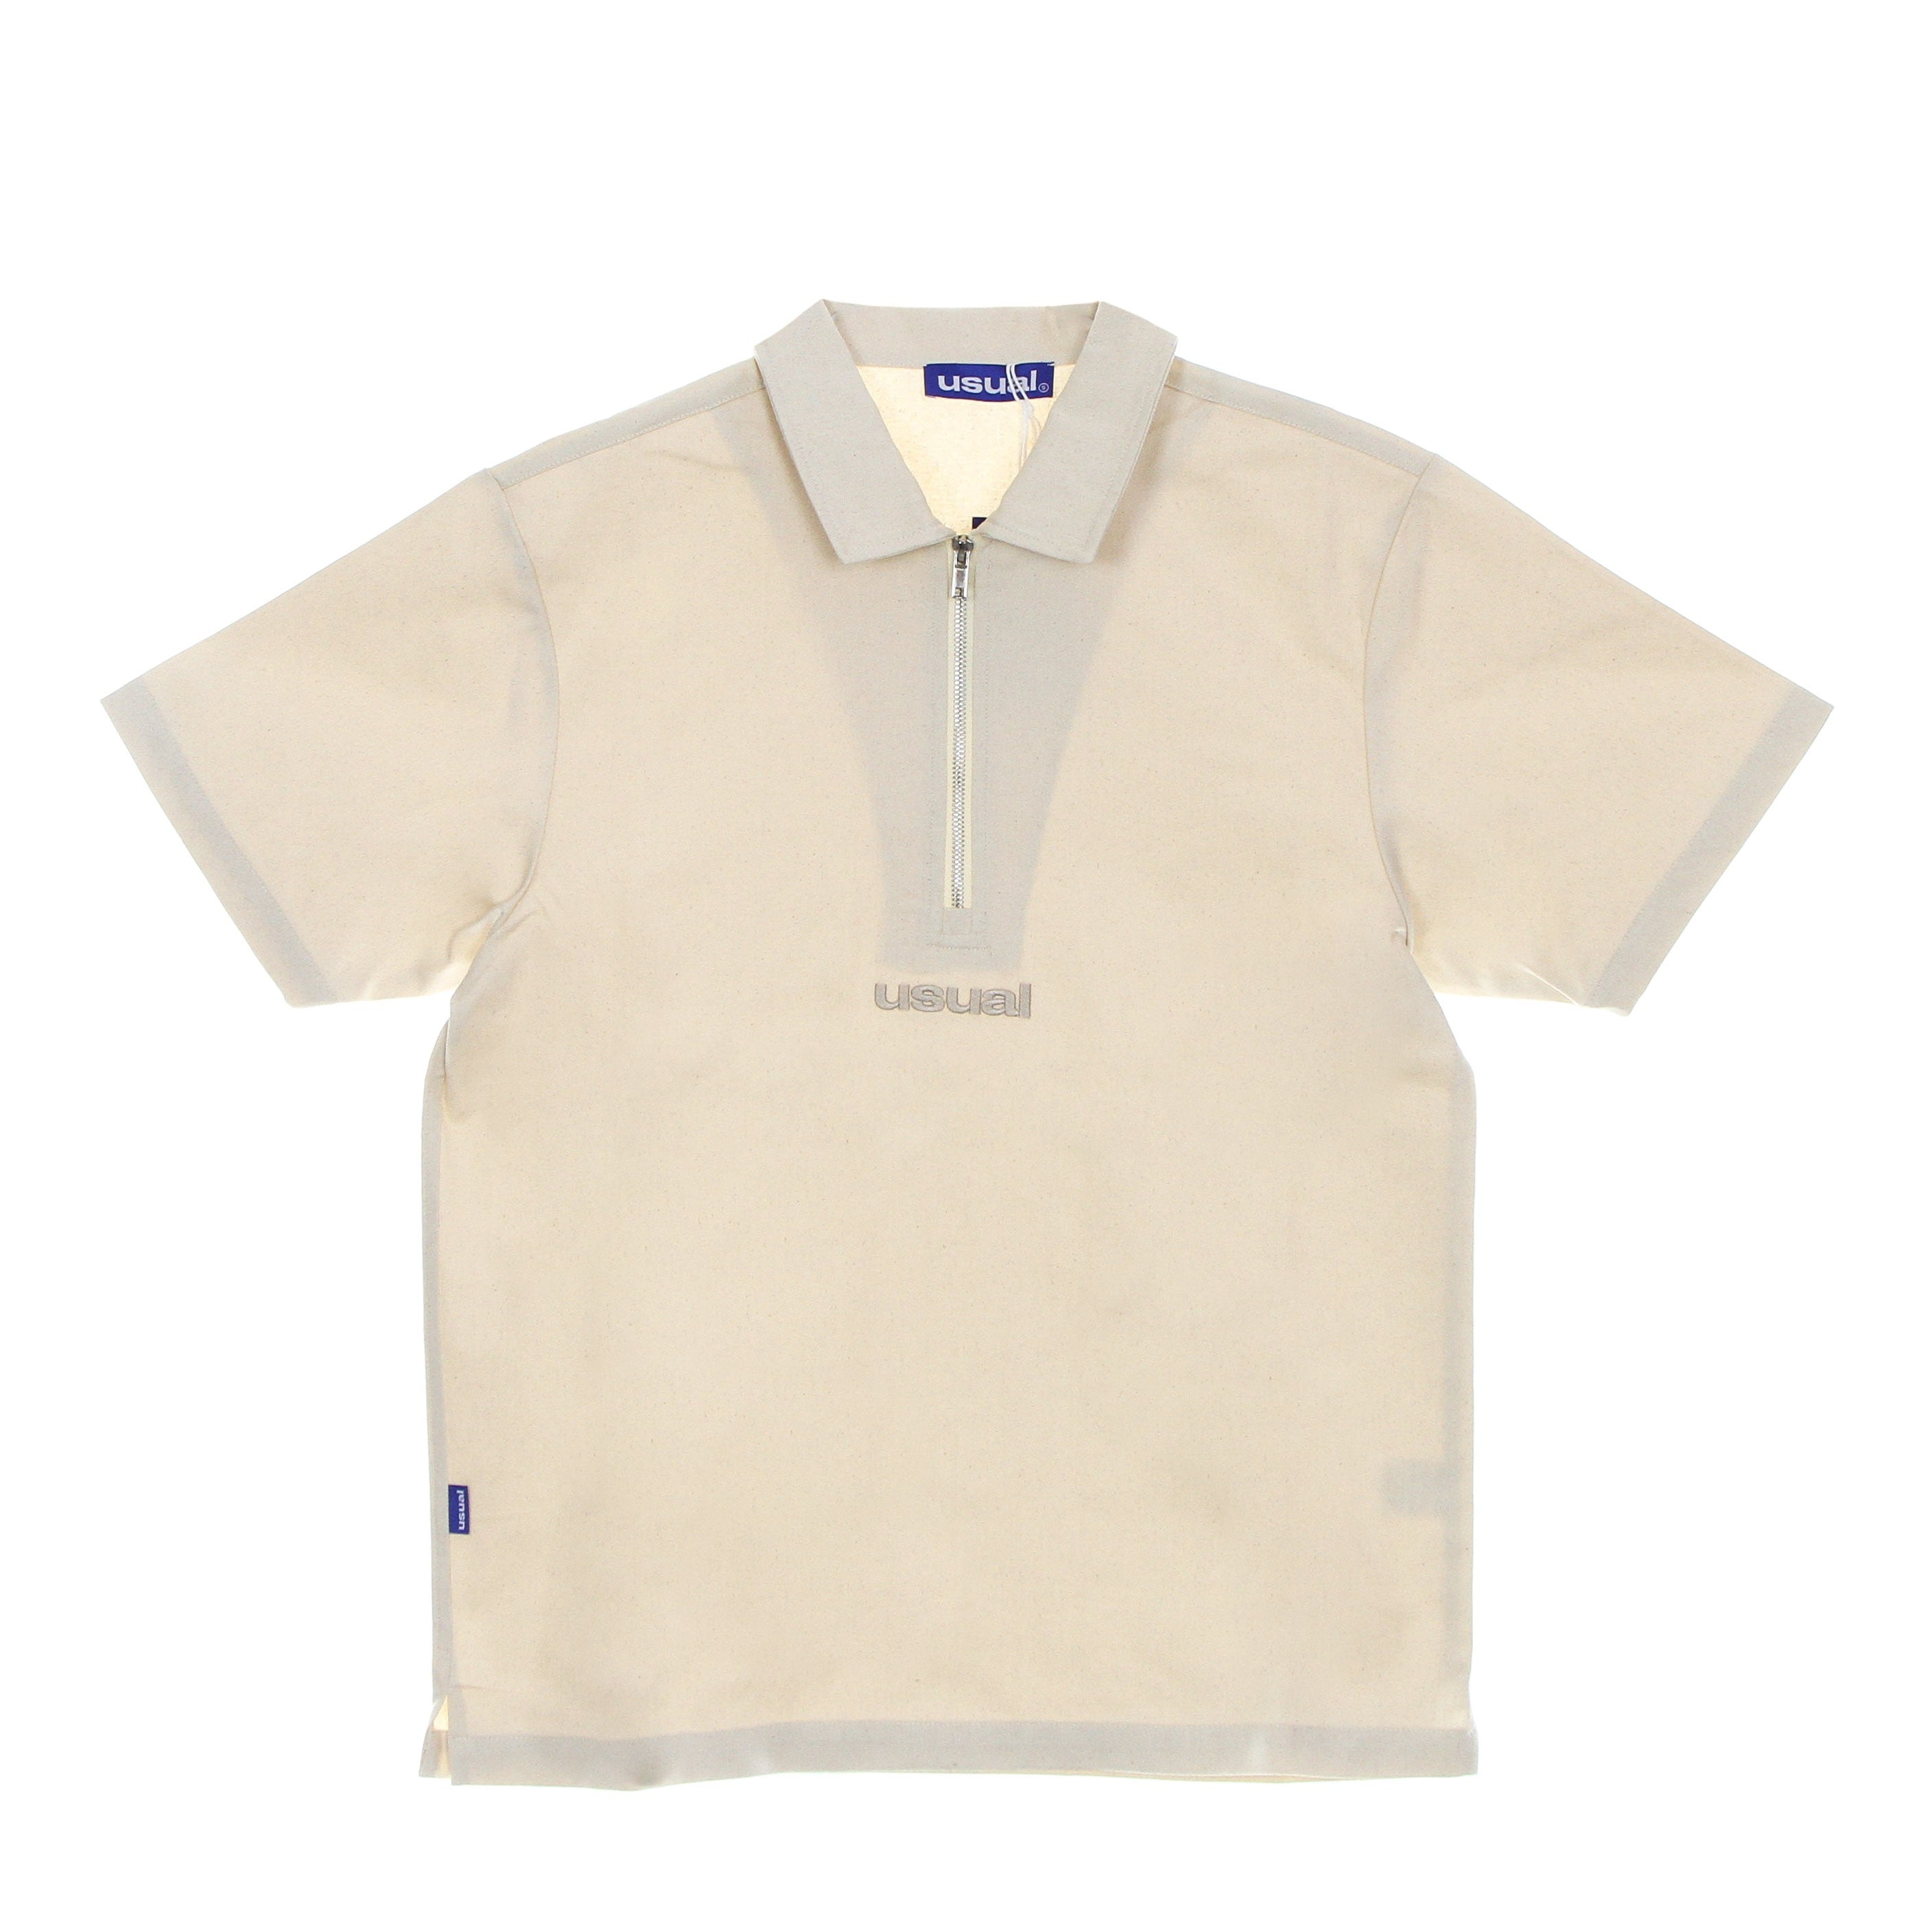 Men's Short Sleeve Shirt Half Shirt Sand